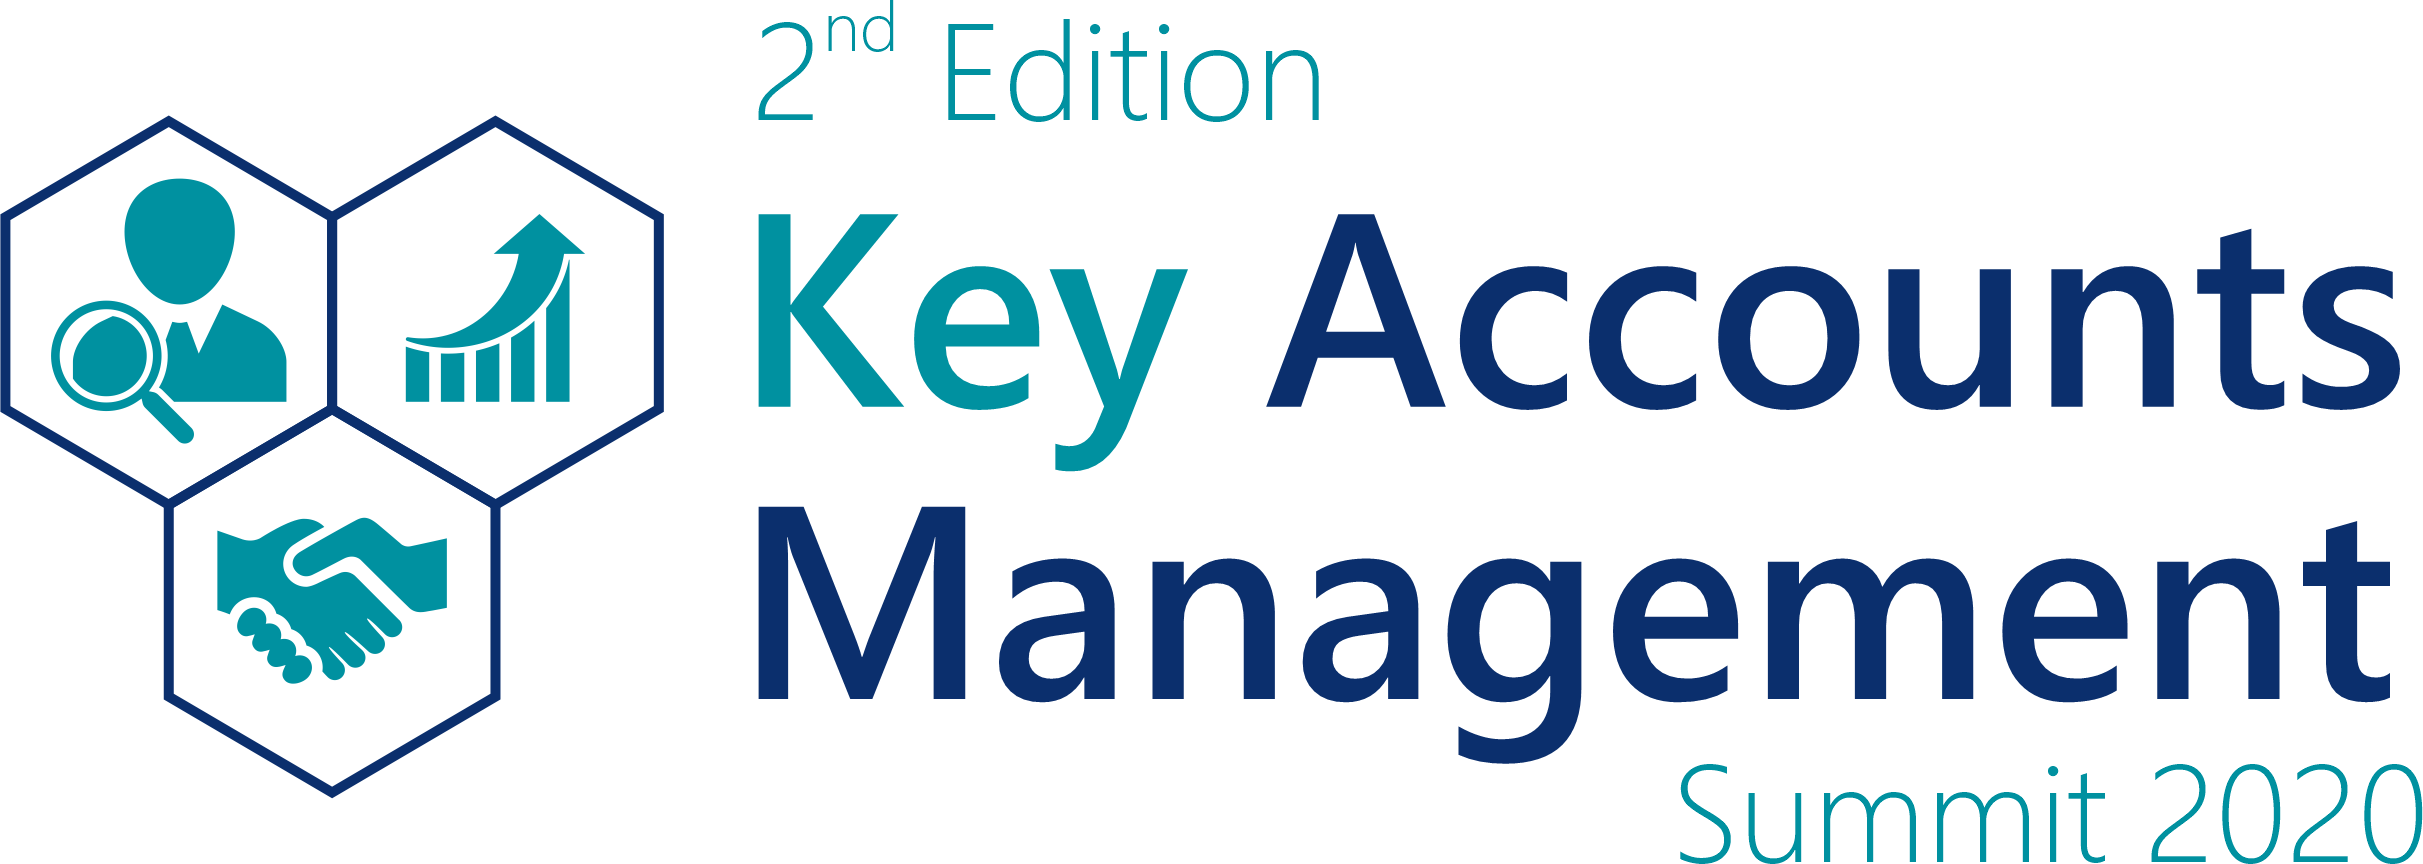 2nd Edition Key Accounts Manangement Summit 2020